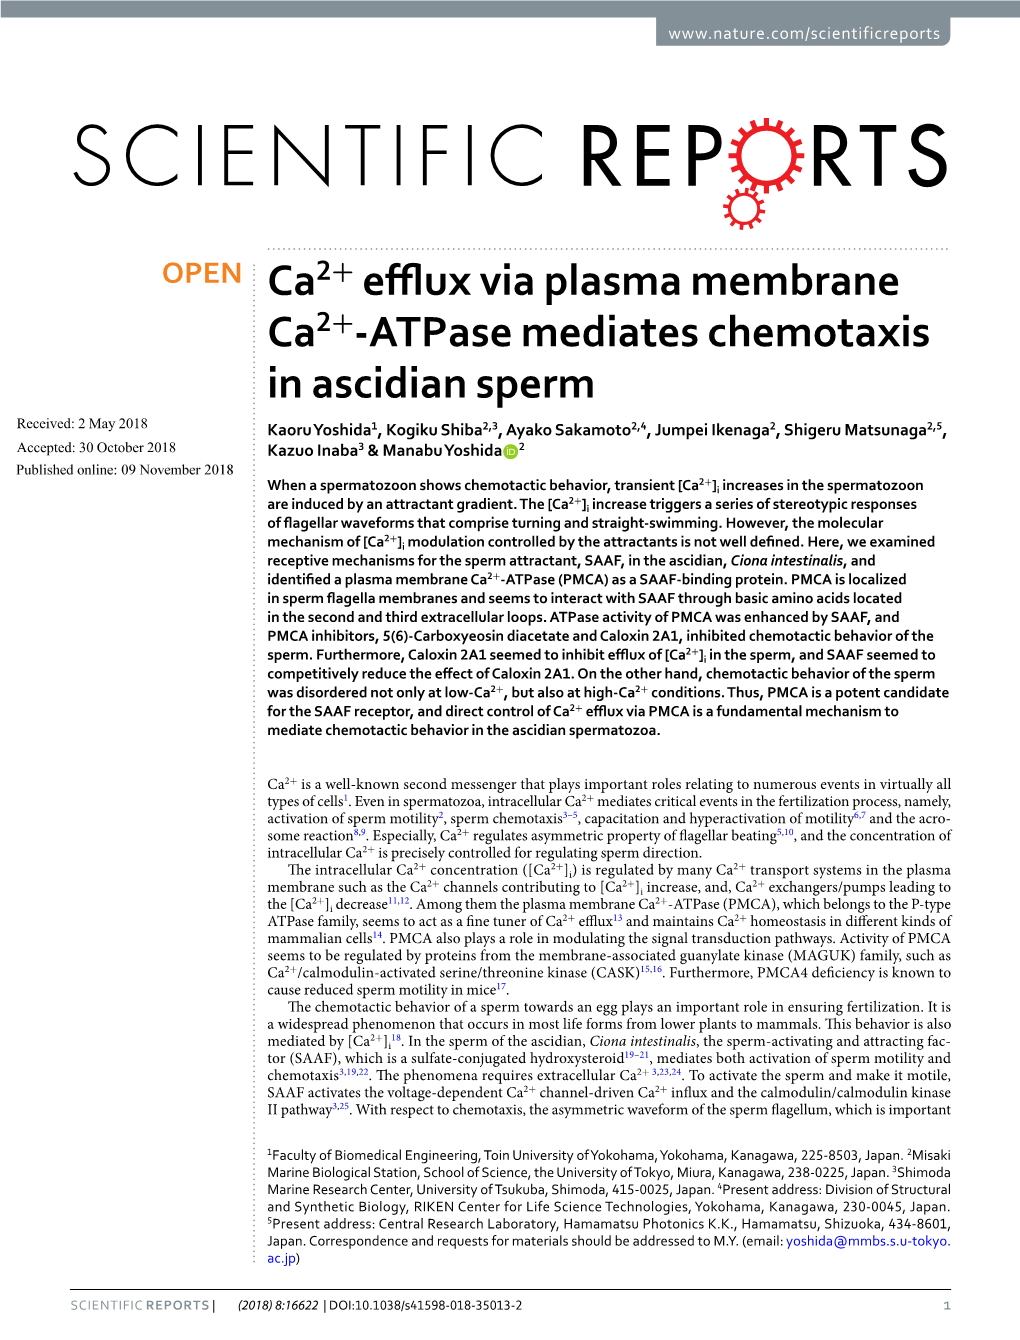 Ca2+ Efflux Via Plasma Membrane Ca2+-Atpase Mediates Chemotaxis